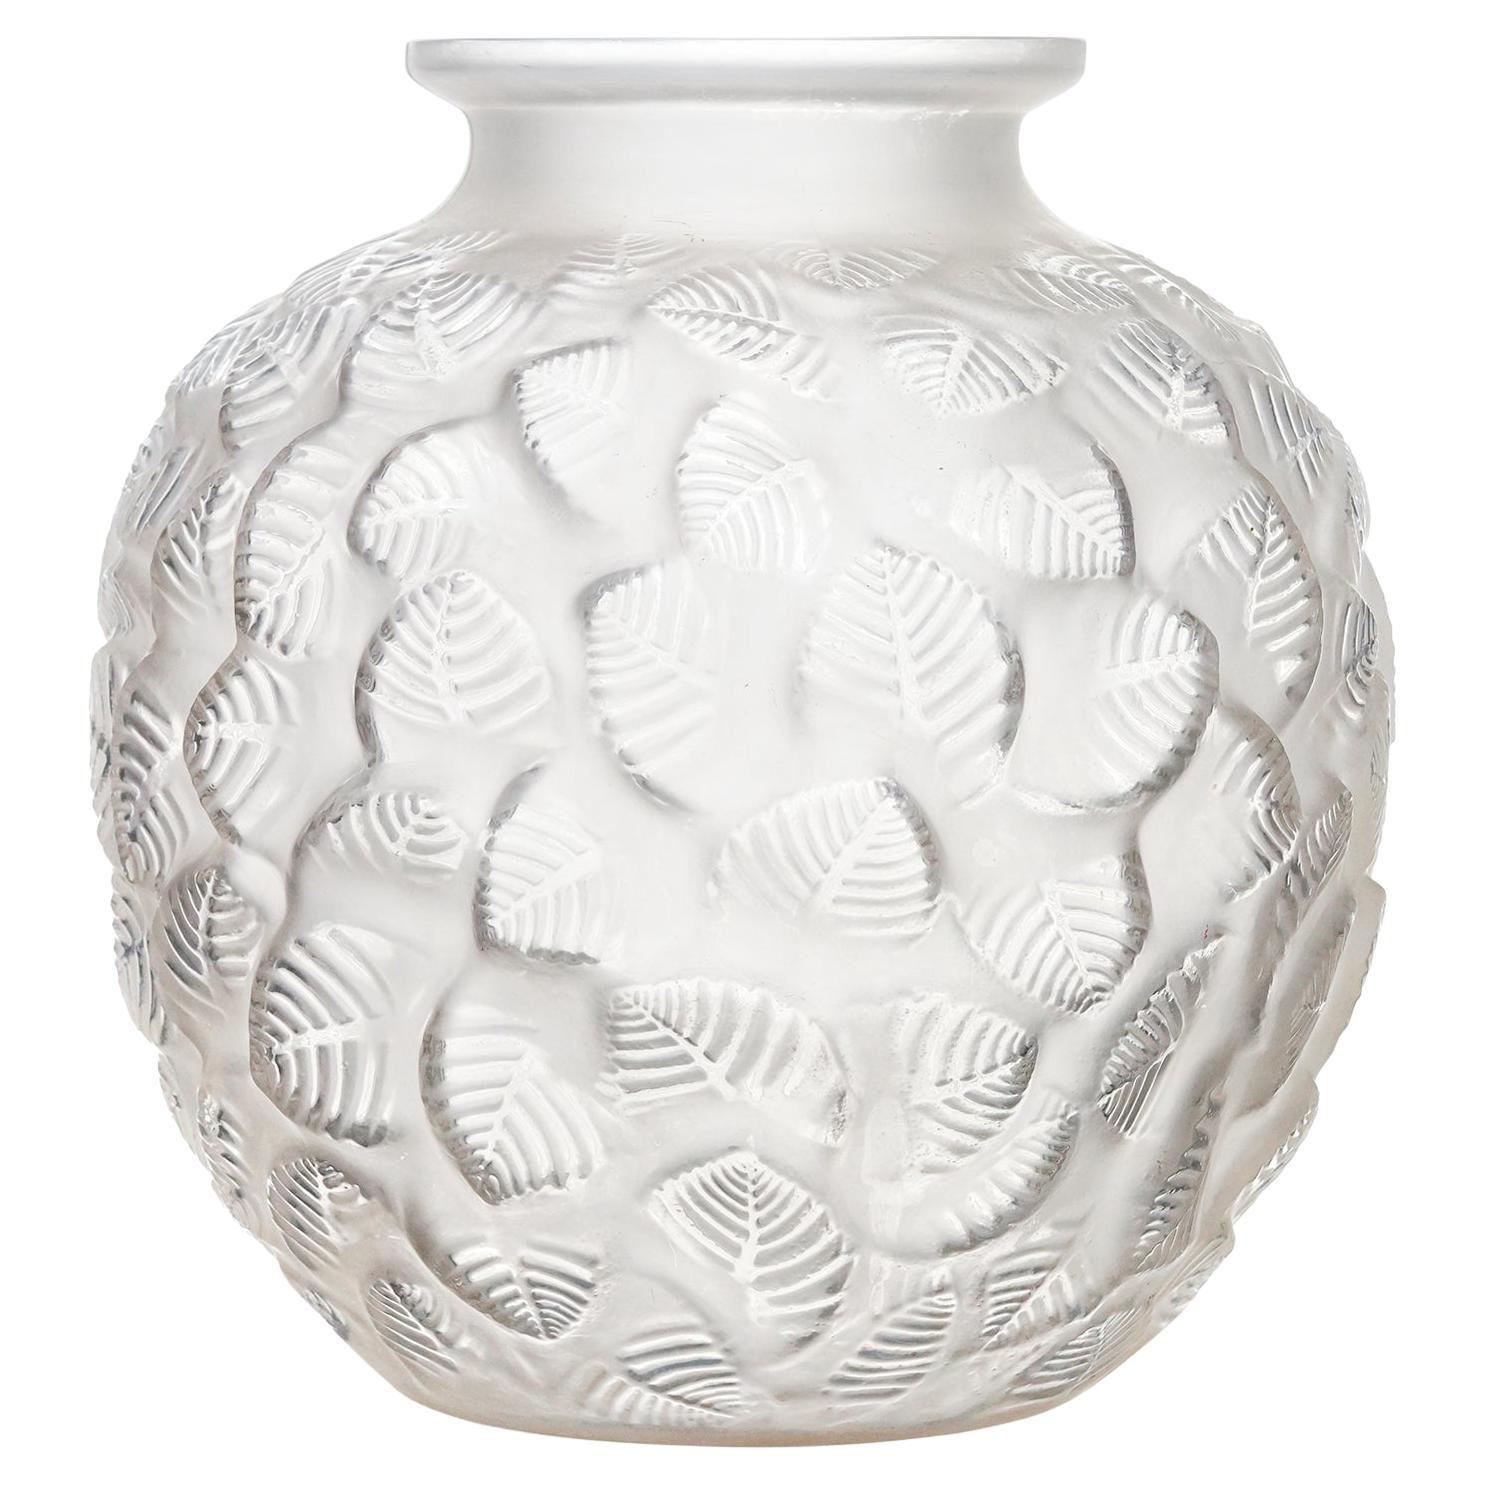 R. Lalique "Charmilles" Vase Sale at | κρυσταλλα τιμες, λαλικ κρυσταλλα, lalique κρυσταλλα